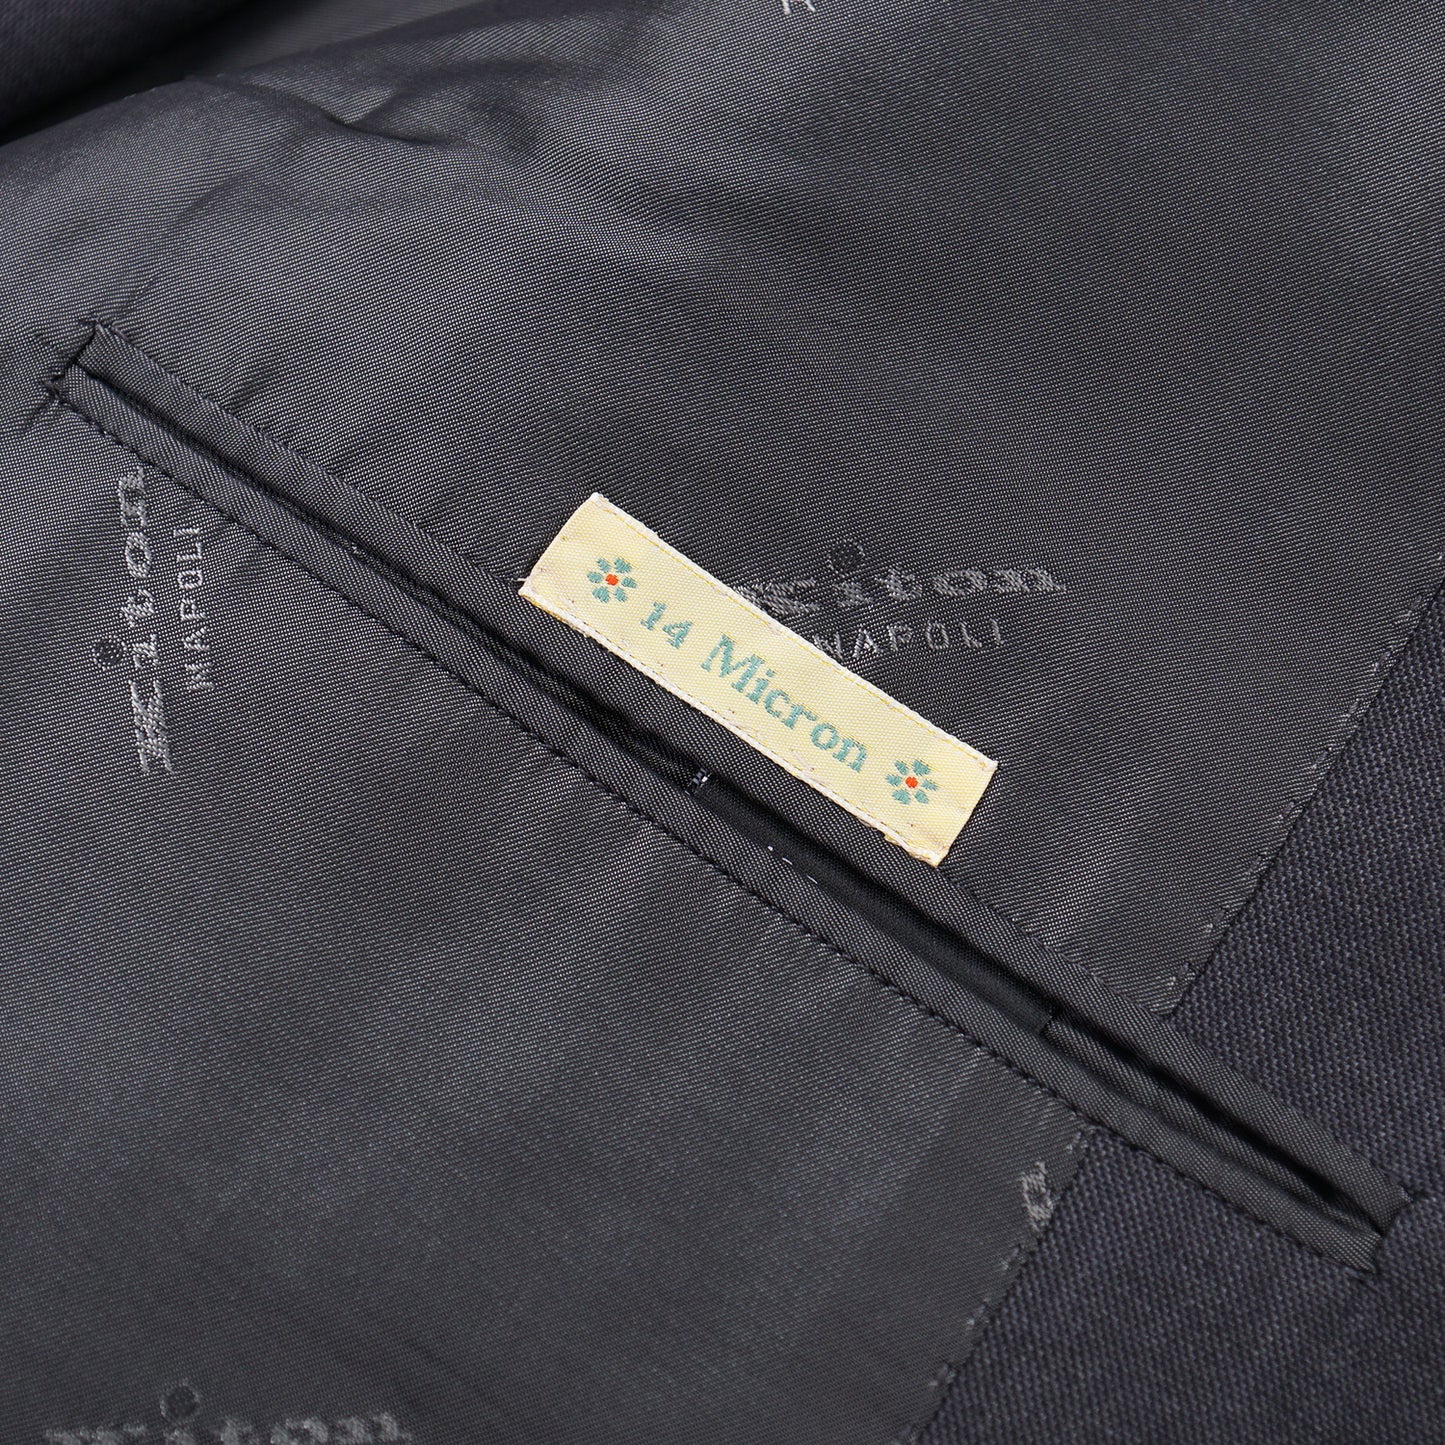 Kiton Slim-Fit Super 180s Suit - Top Shelf Apparel